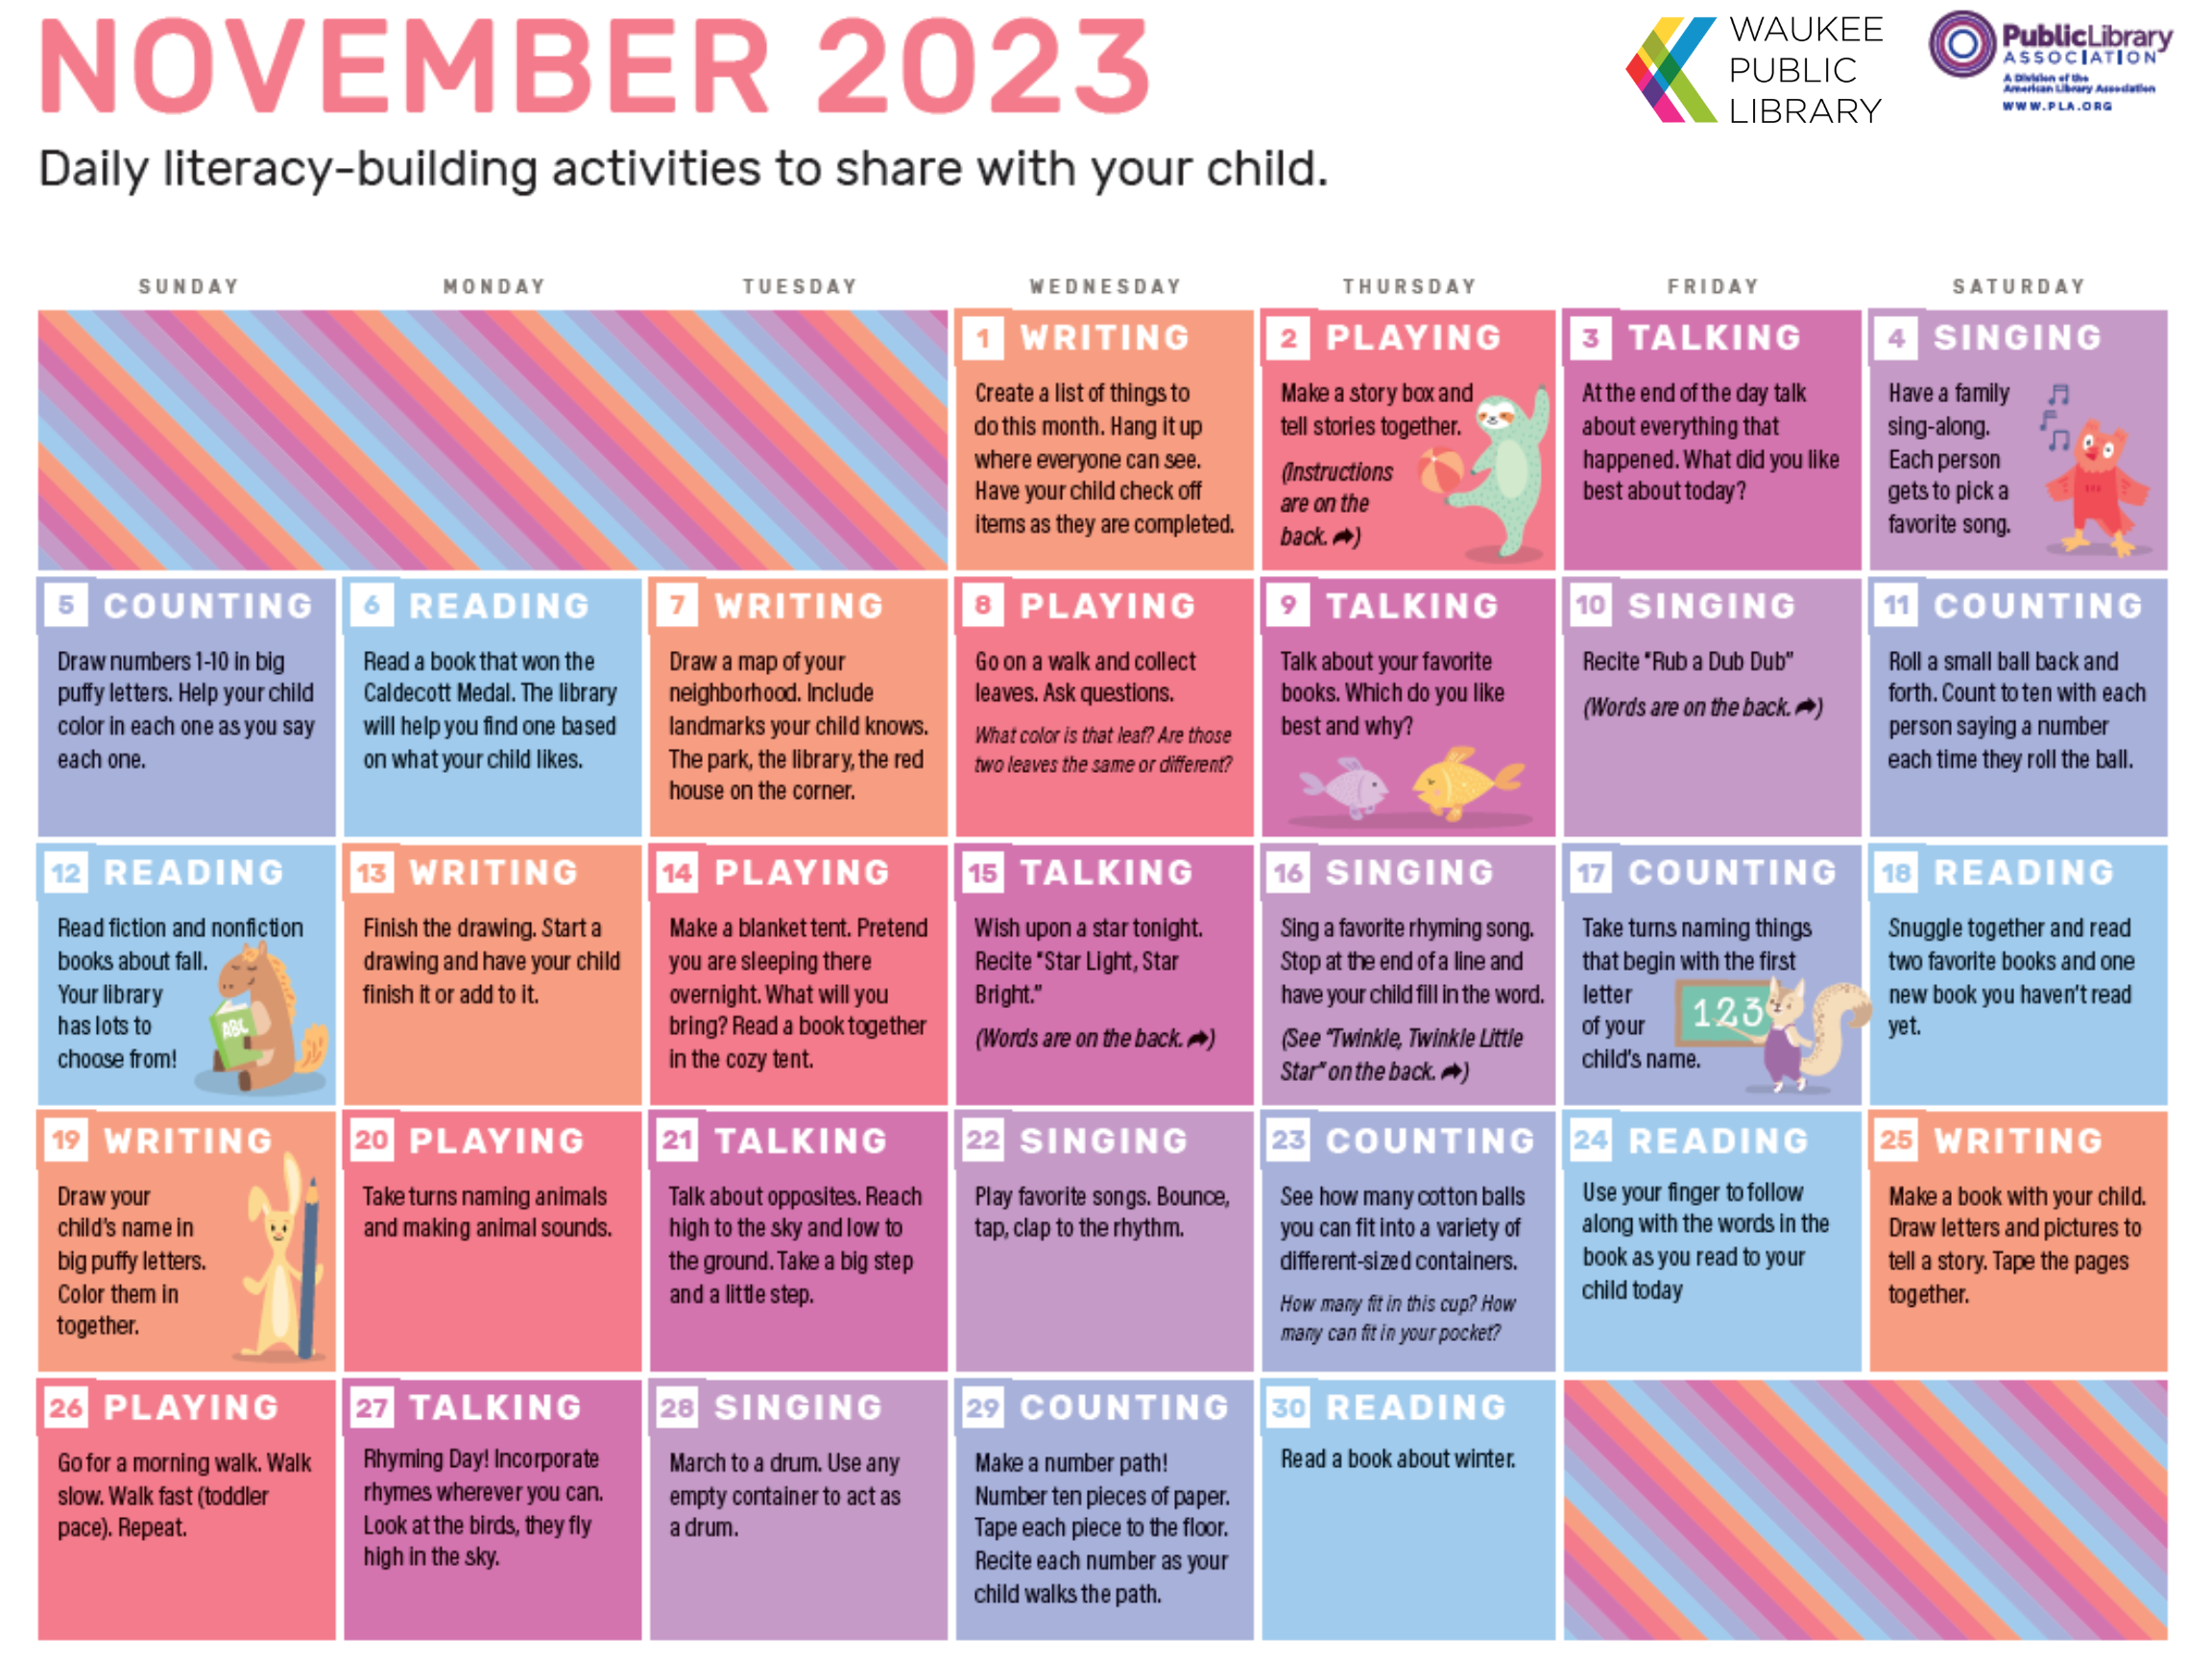 Image of November 2023 calendar.